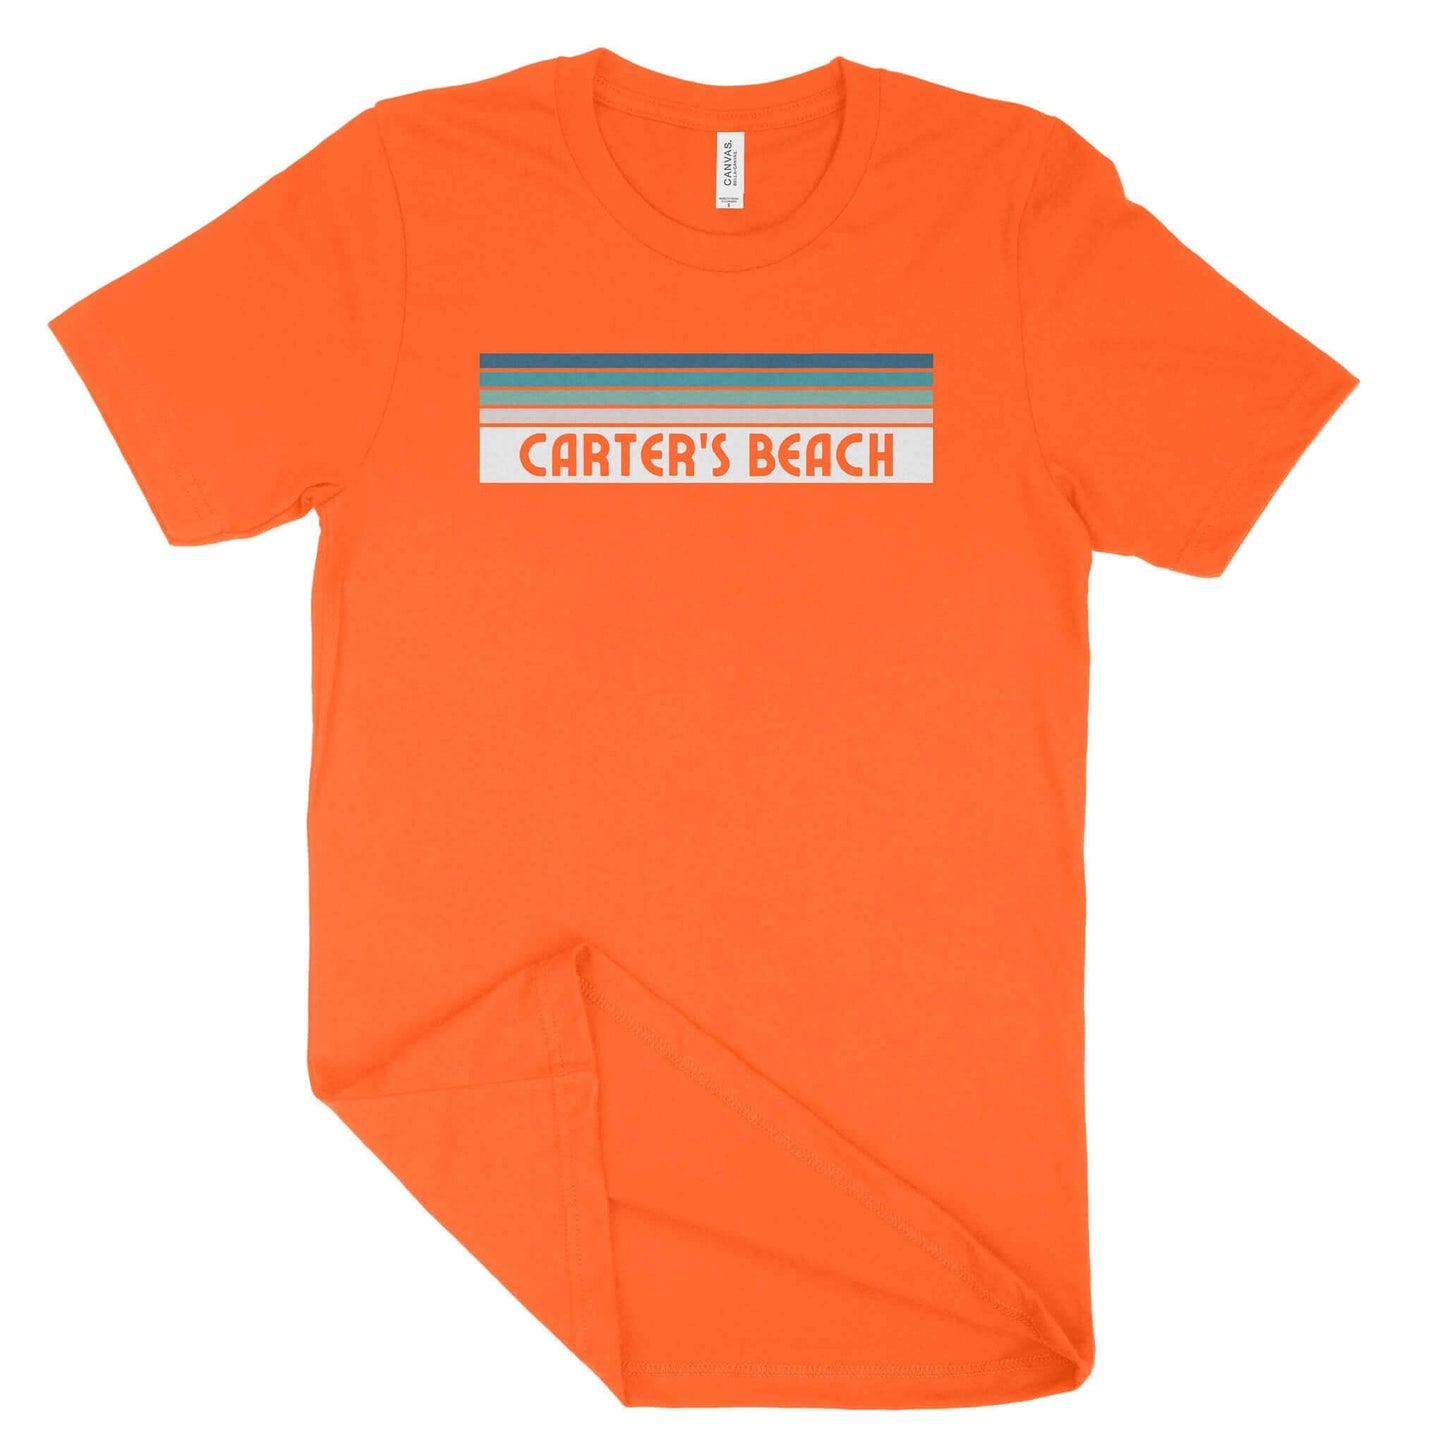 Carter's Beach Unisex T-Shirt-East Coast AF Apparel